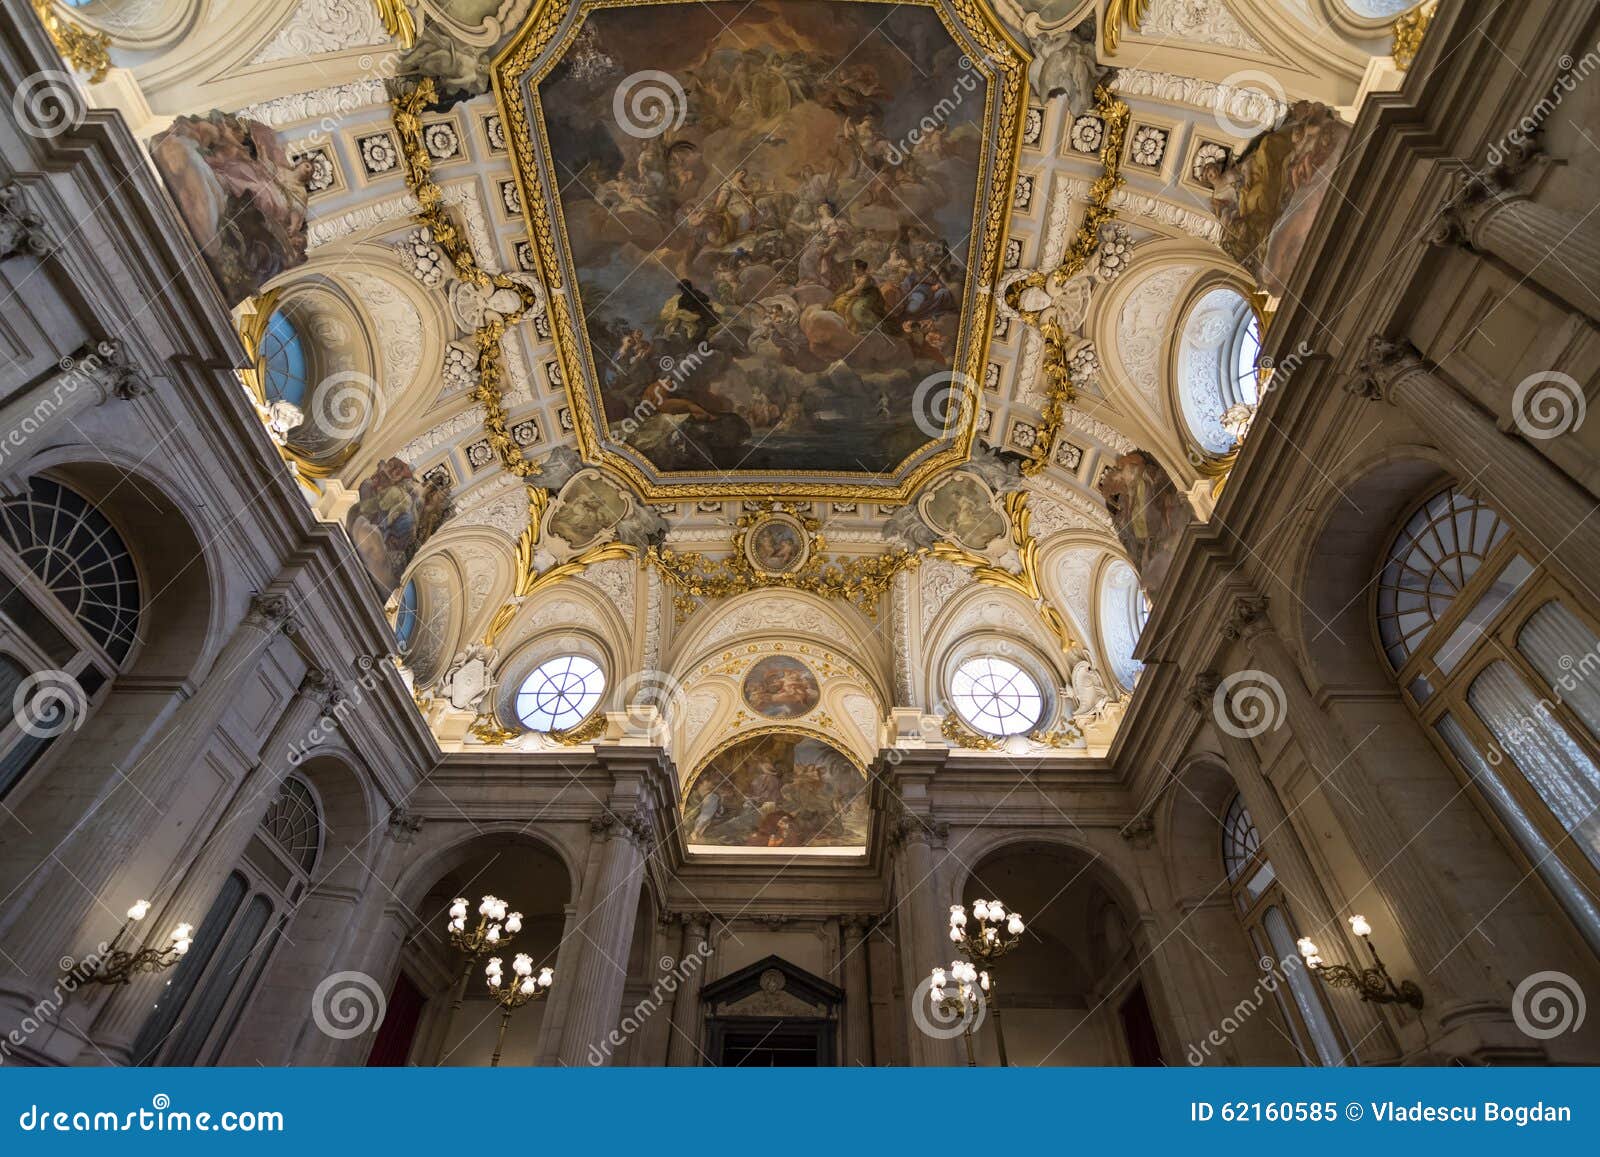 Royal Palace Of Madrid Interior Stock Image Image Of